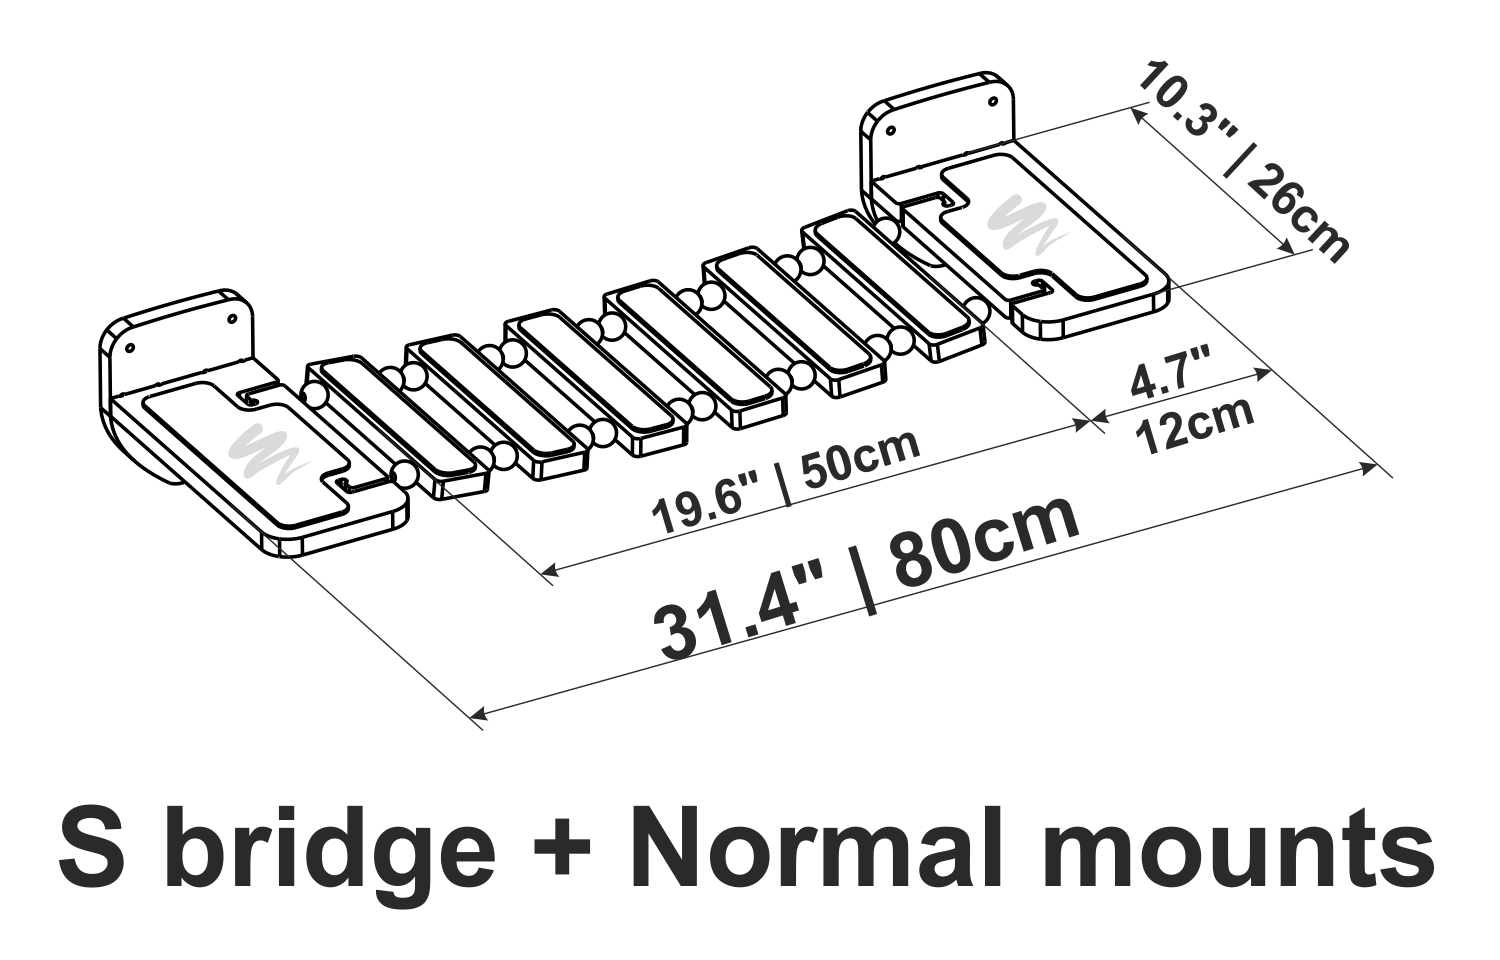 Wall cat bridge dimensions